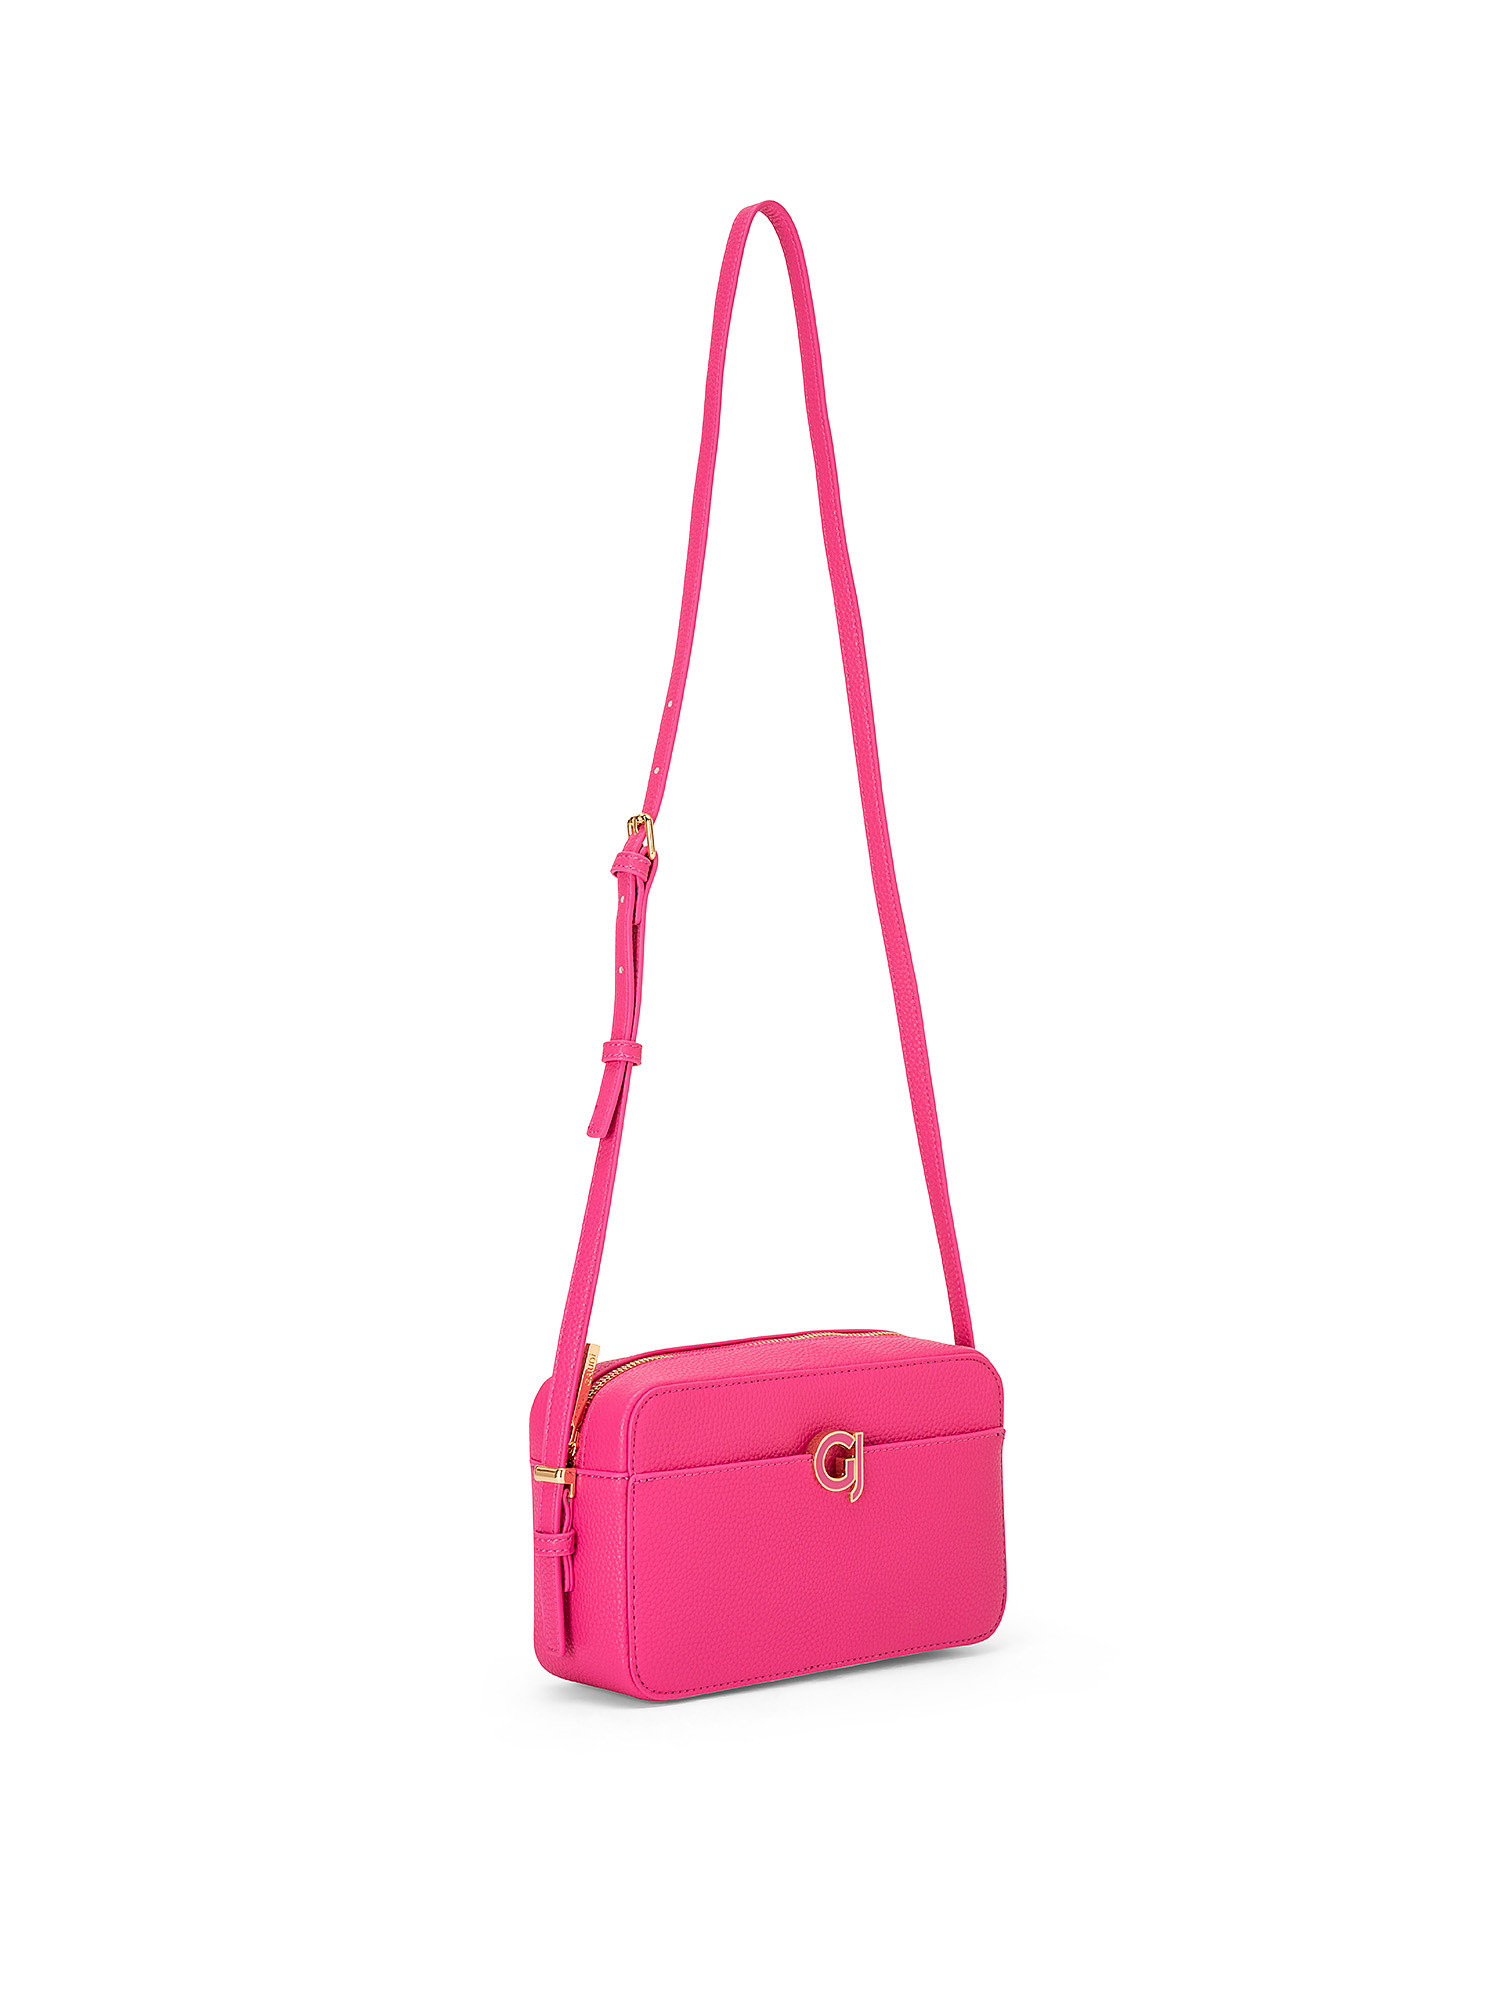 Sapphire crossbody bag, Pink Fuchsia, large image number 1